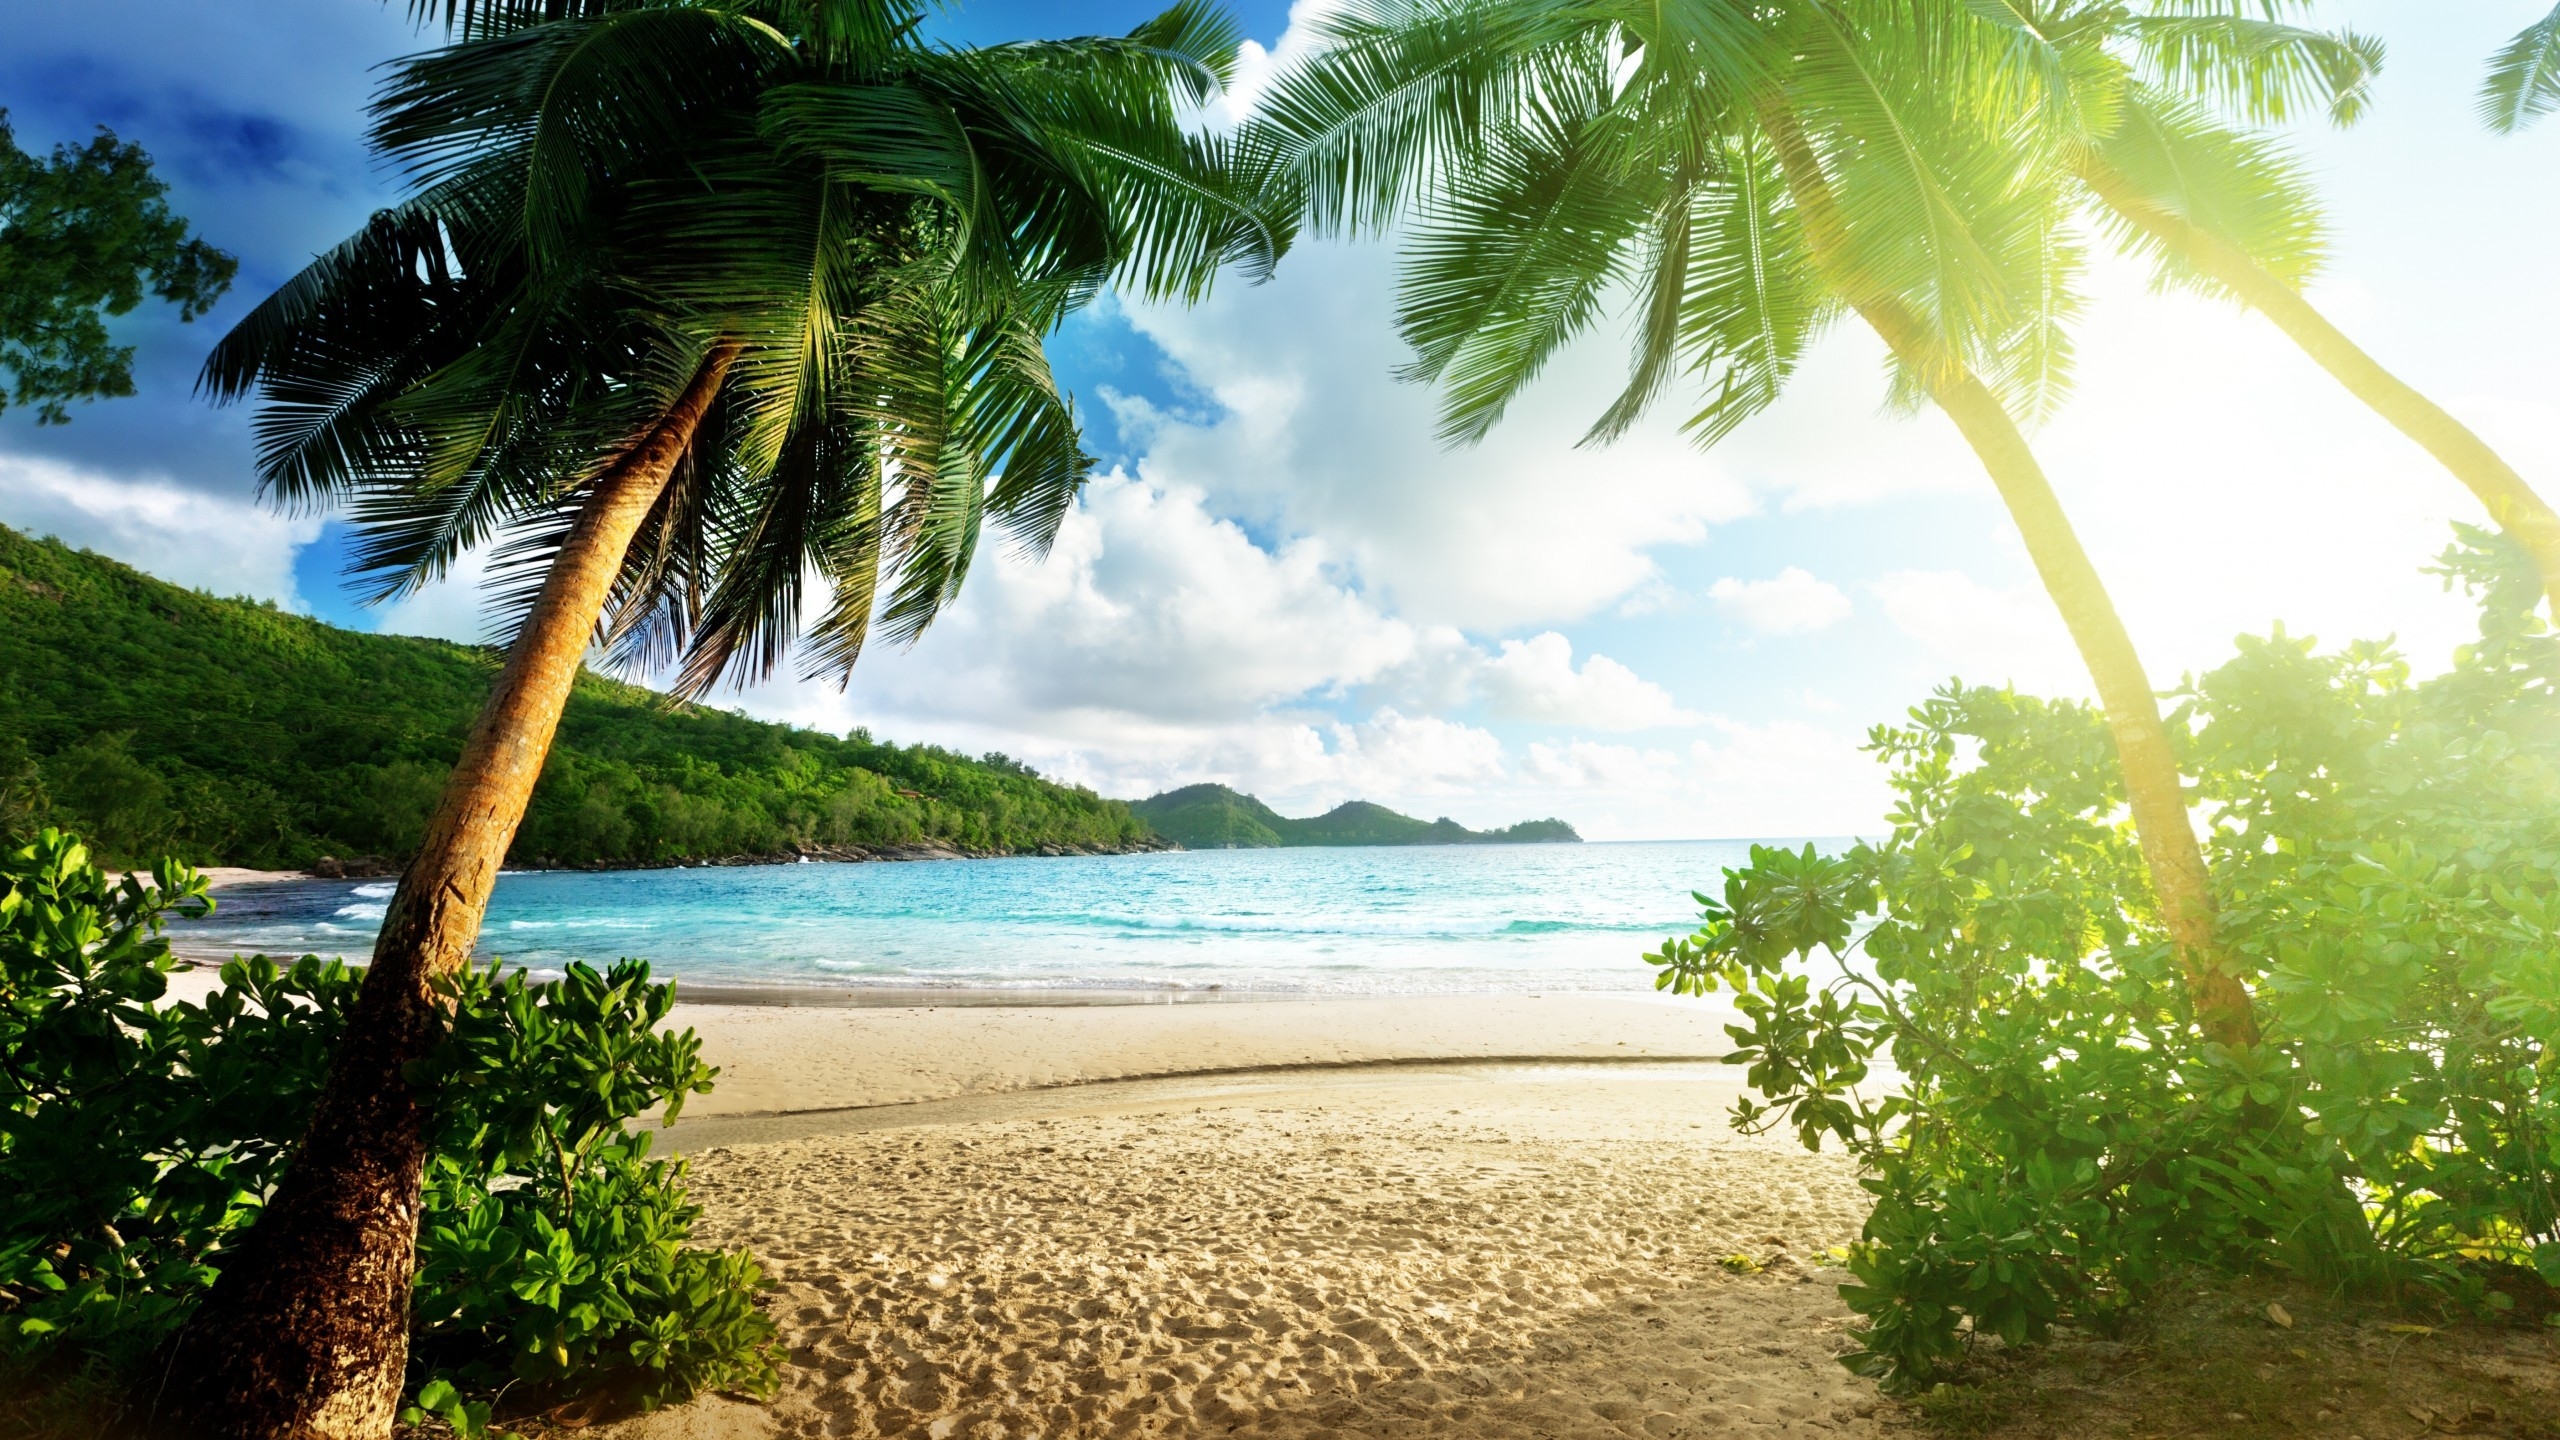 Paradise Palm Beach for 2560x1440 HDTV resolution